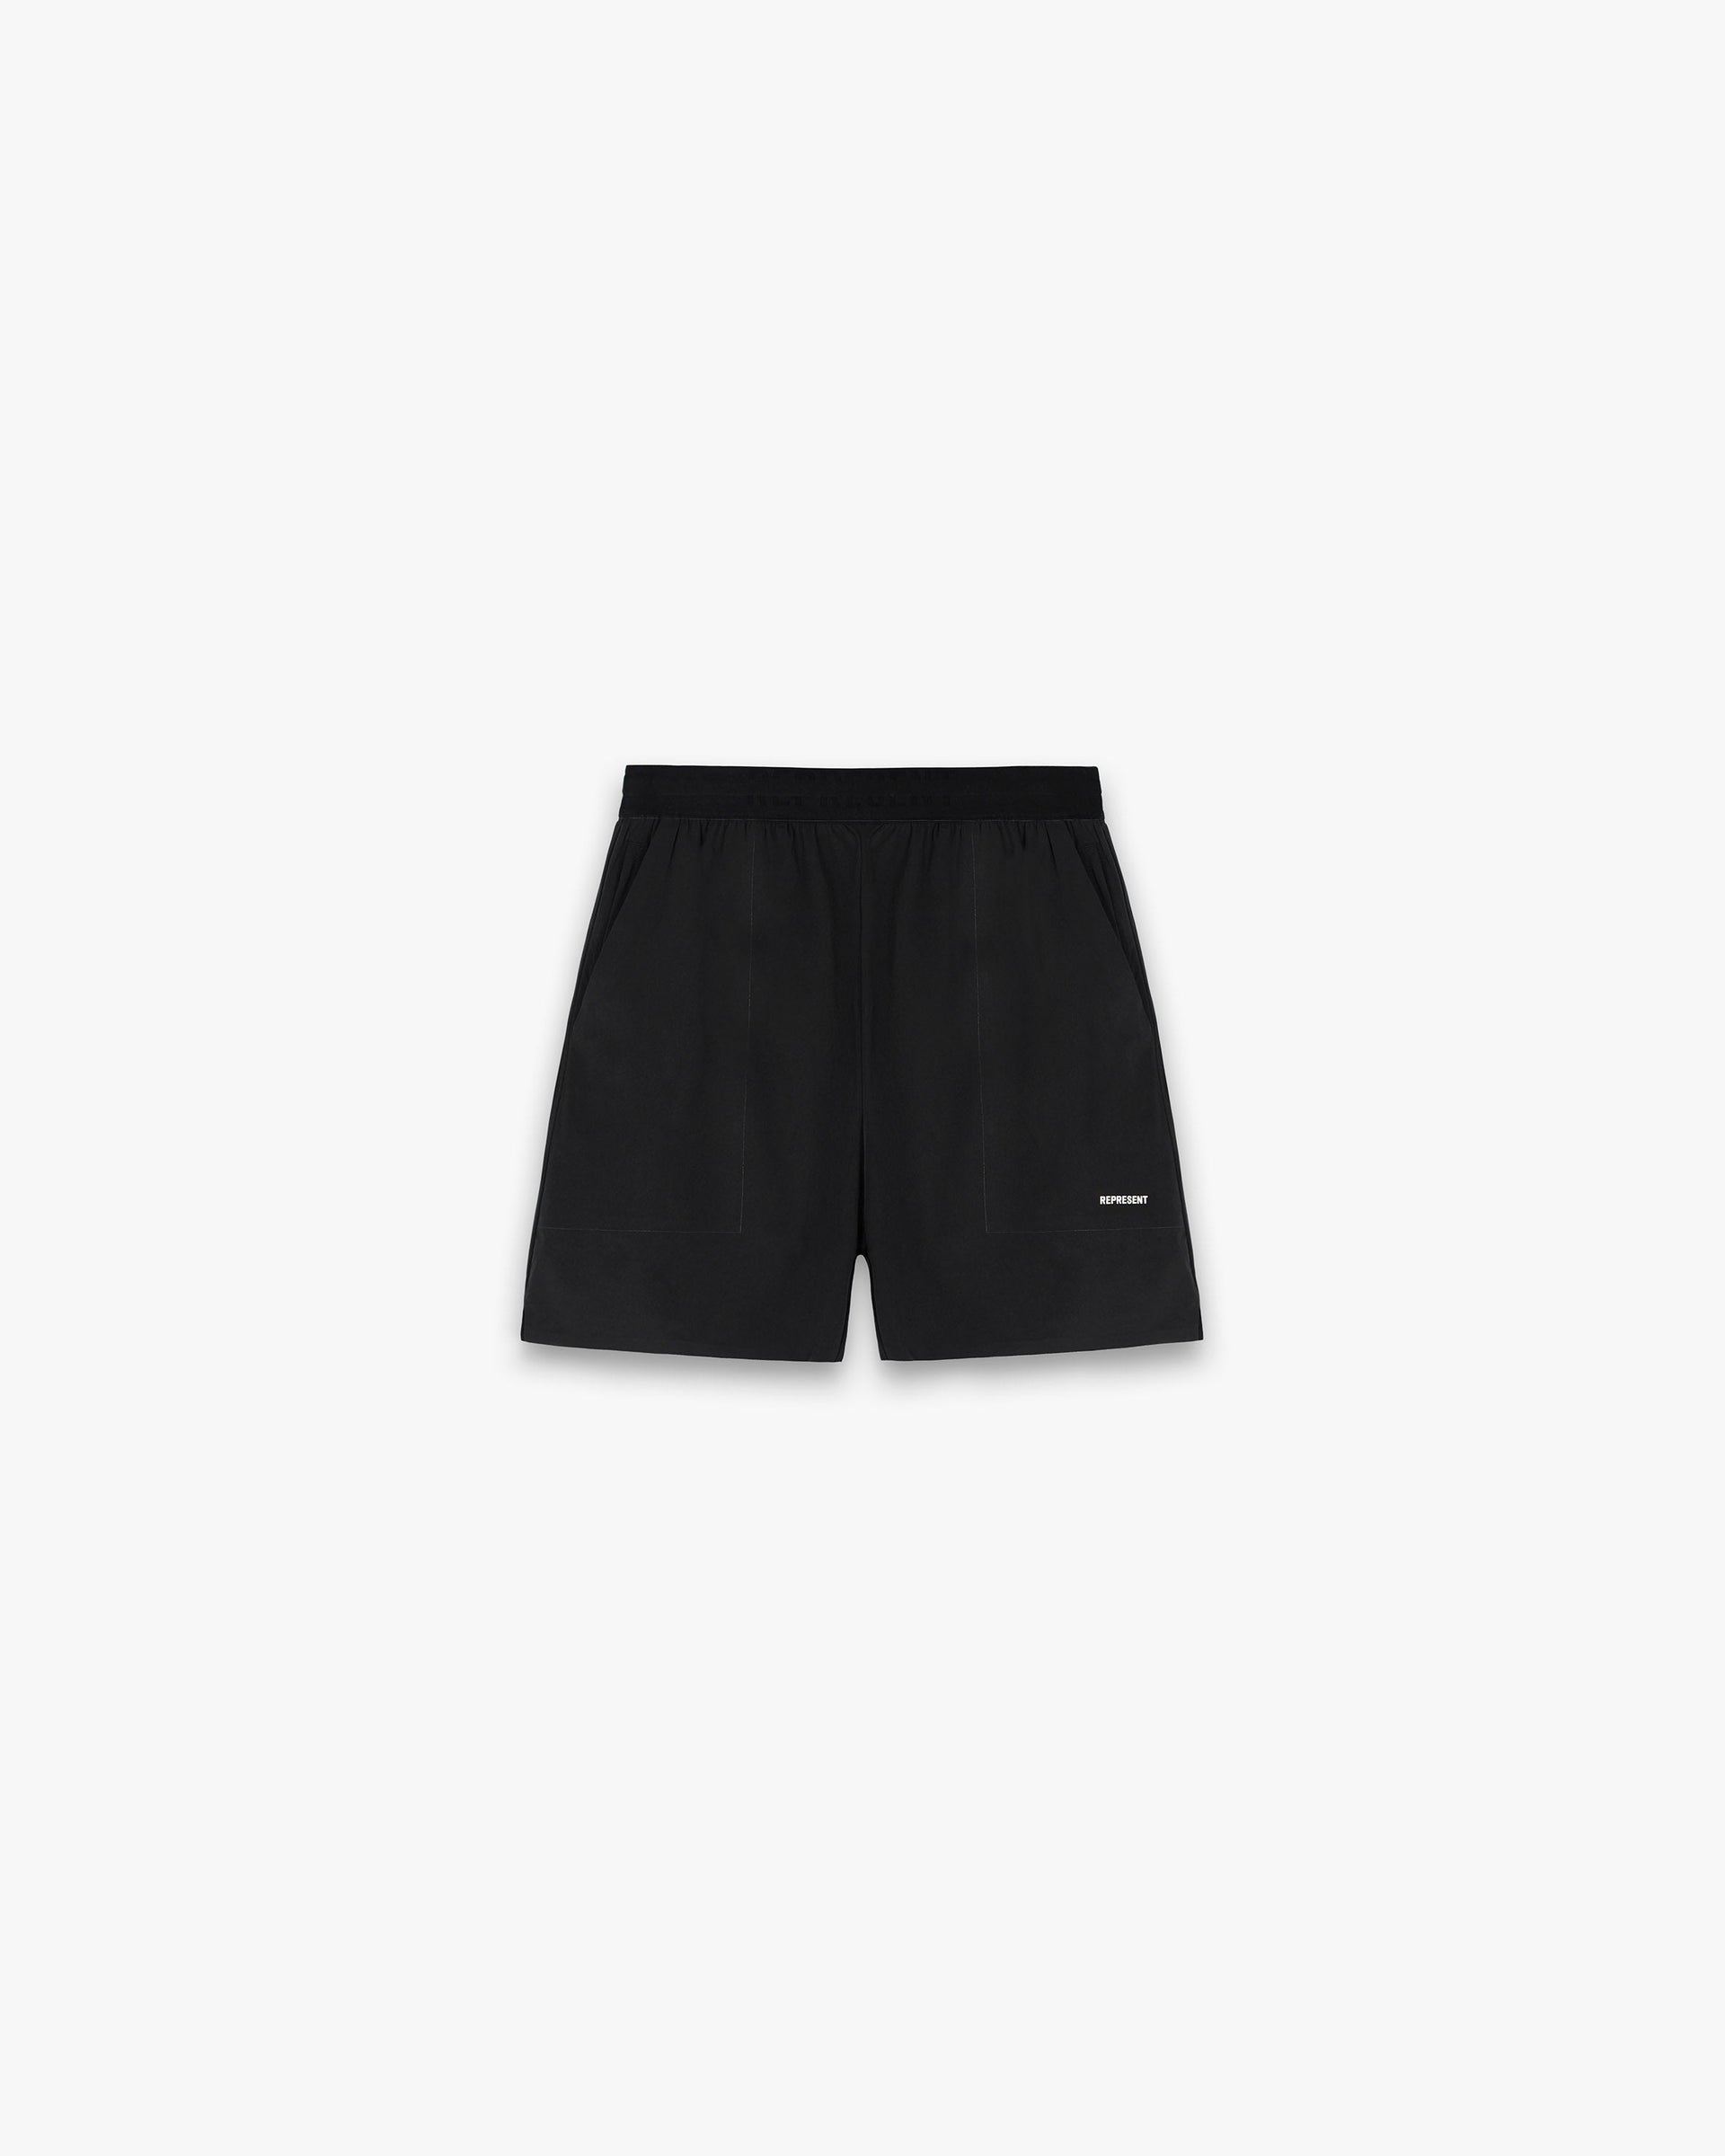 Team 247 Fused Shorts | Black Shorts 247 | Represent Clo